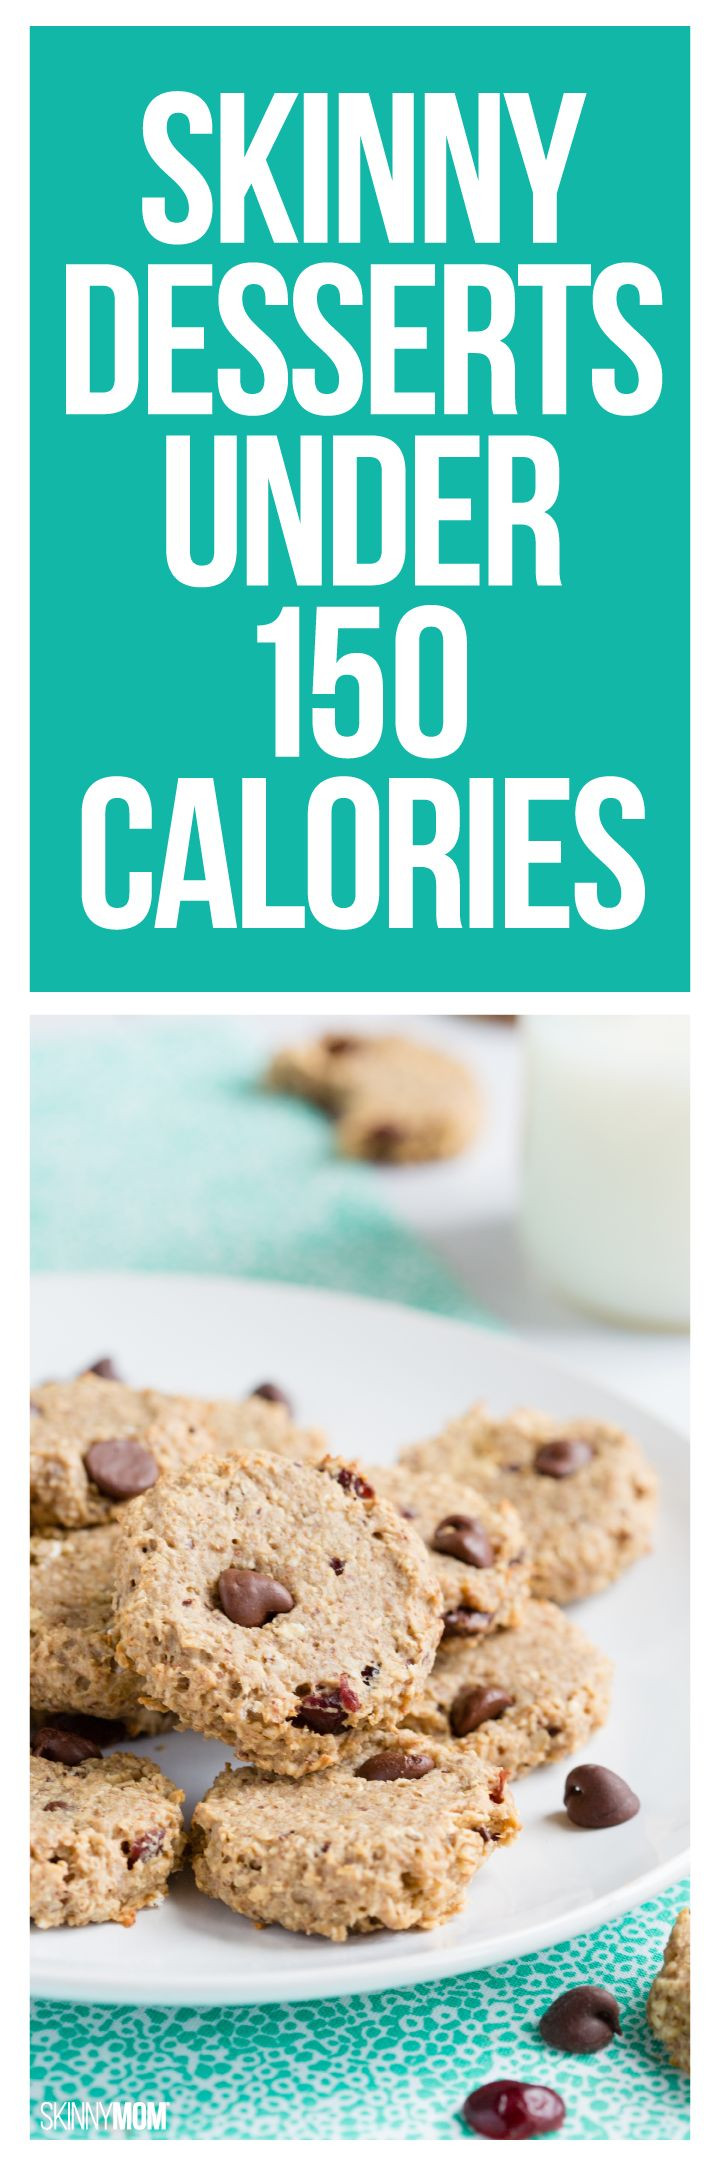 Low Calorie Desserts Under 50 Calories
 55 Skinny Desserts Under 150 Calories